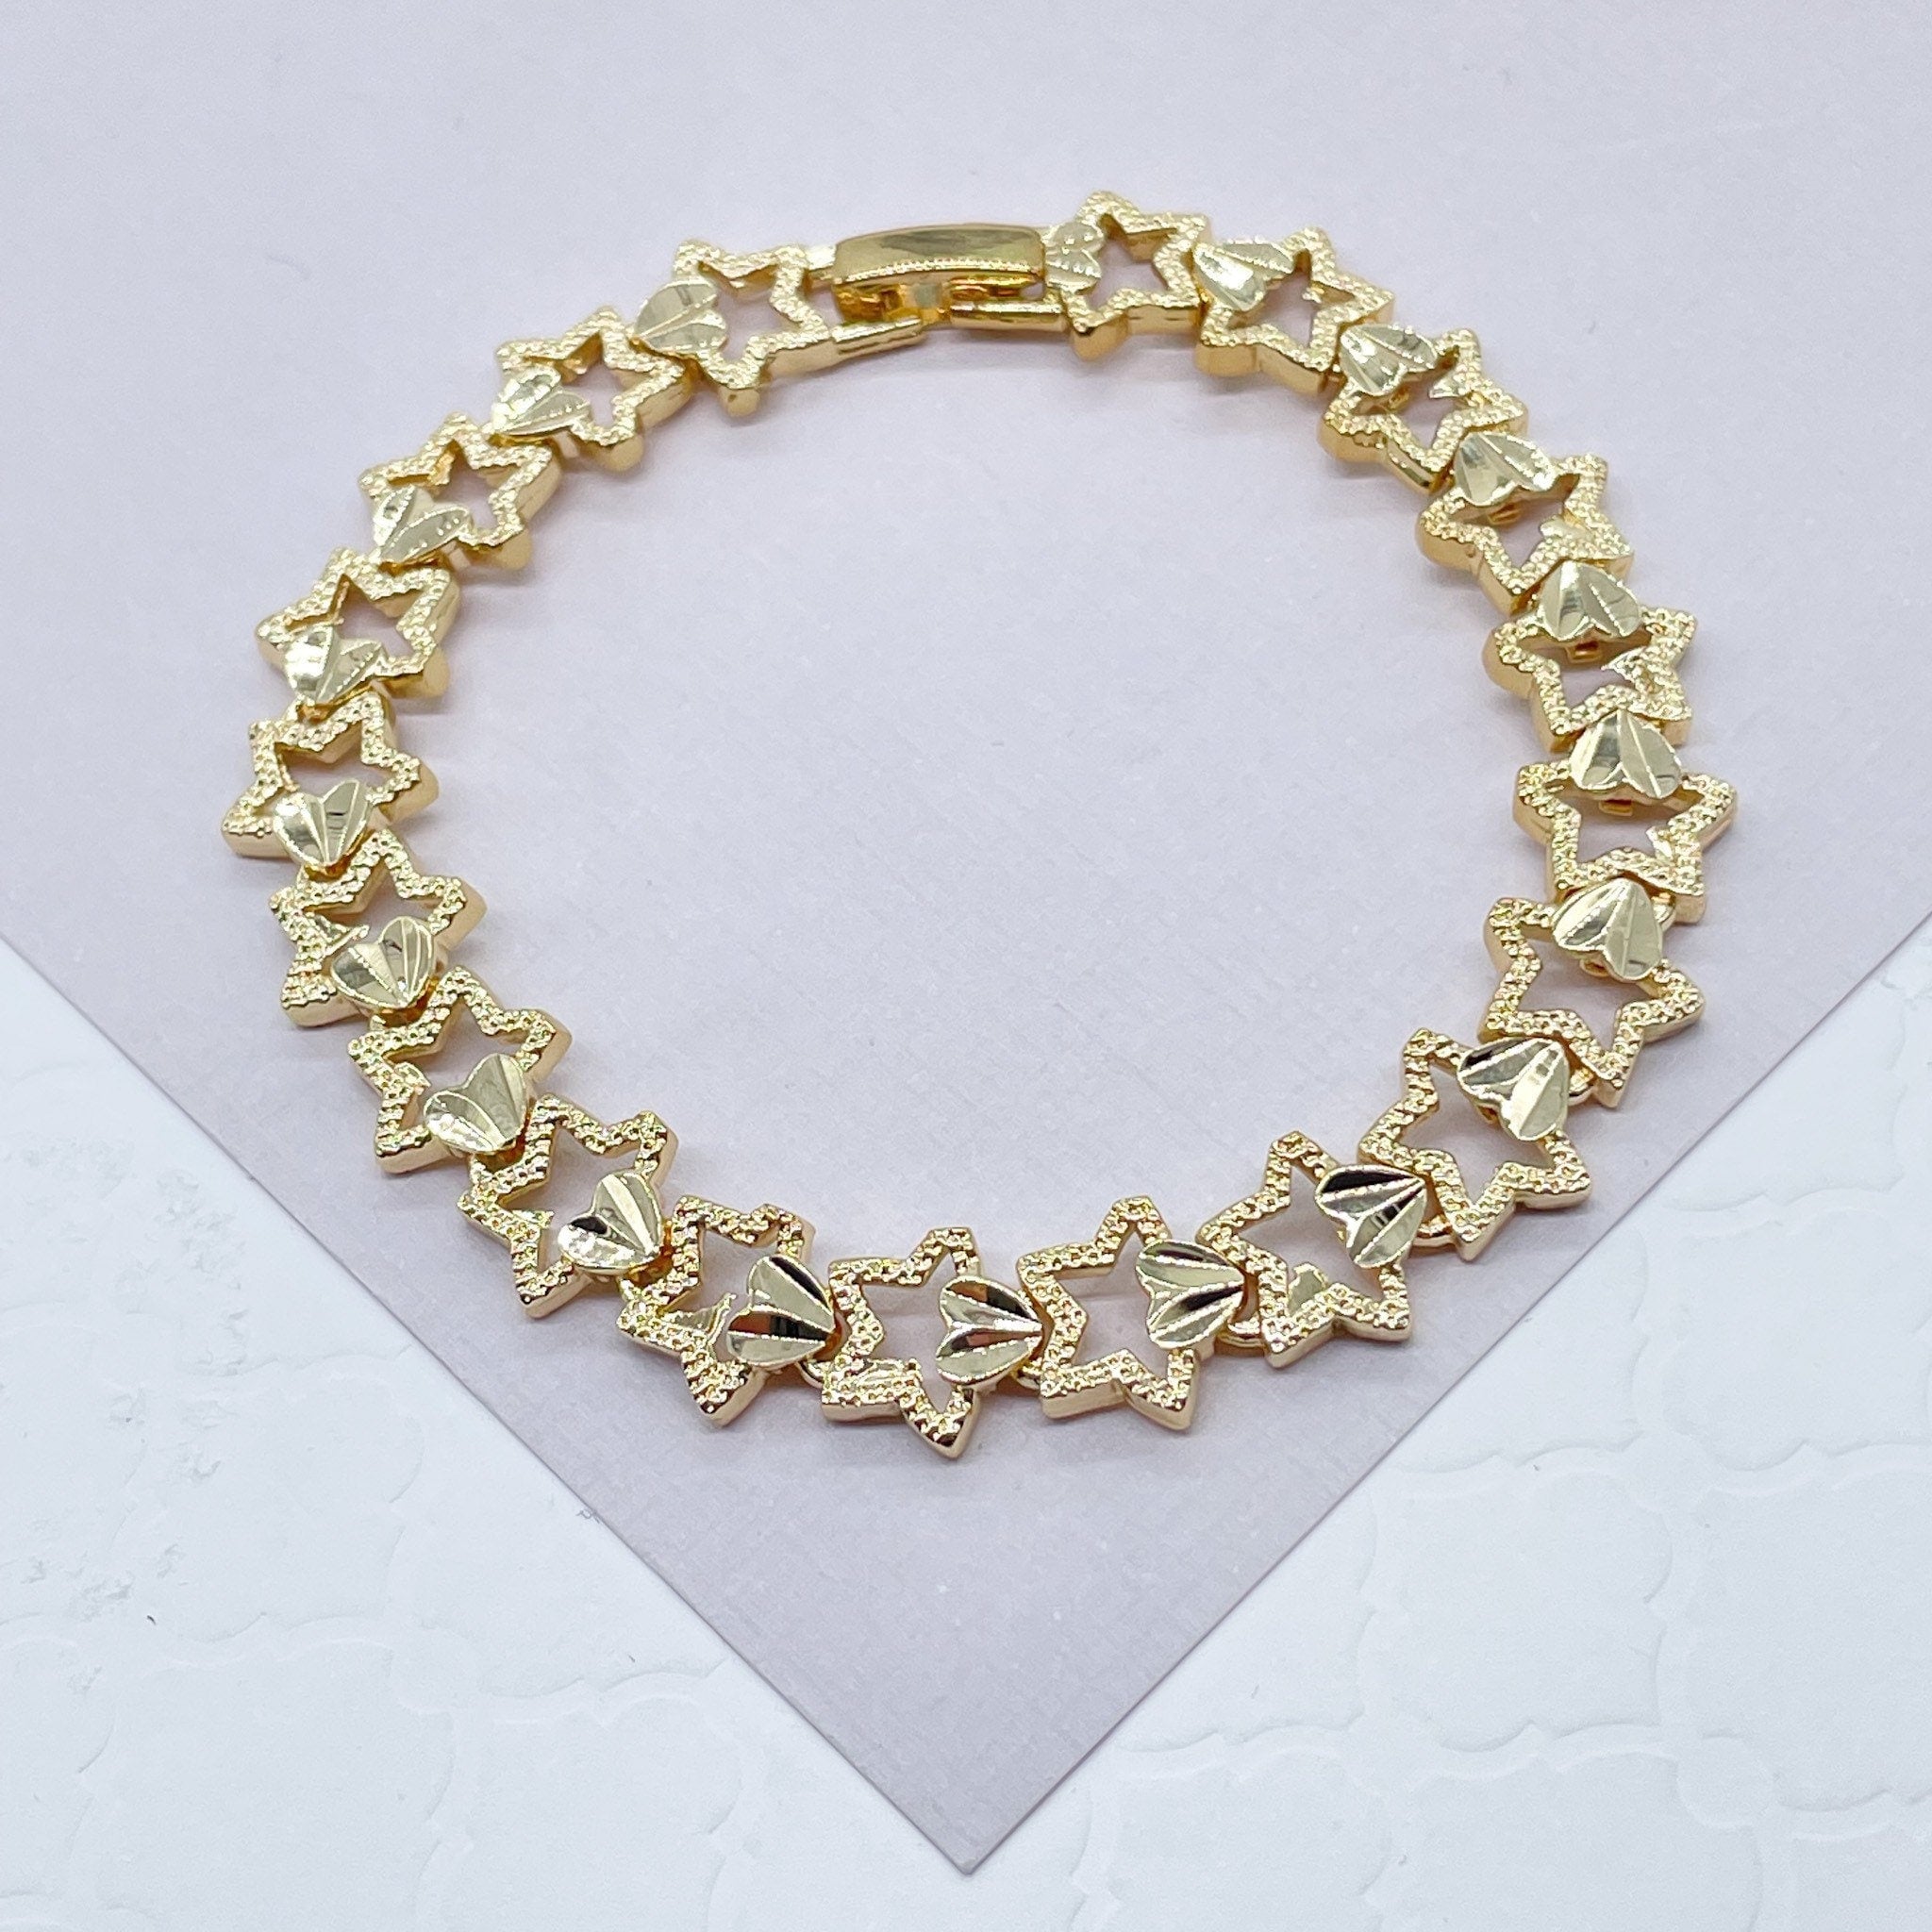 Elegant gold bracelet with intricate patterns on a dark background. -  indivstock